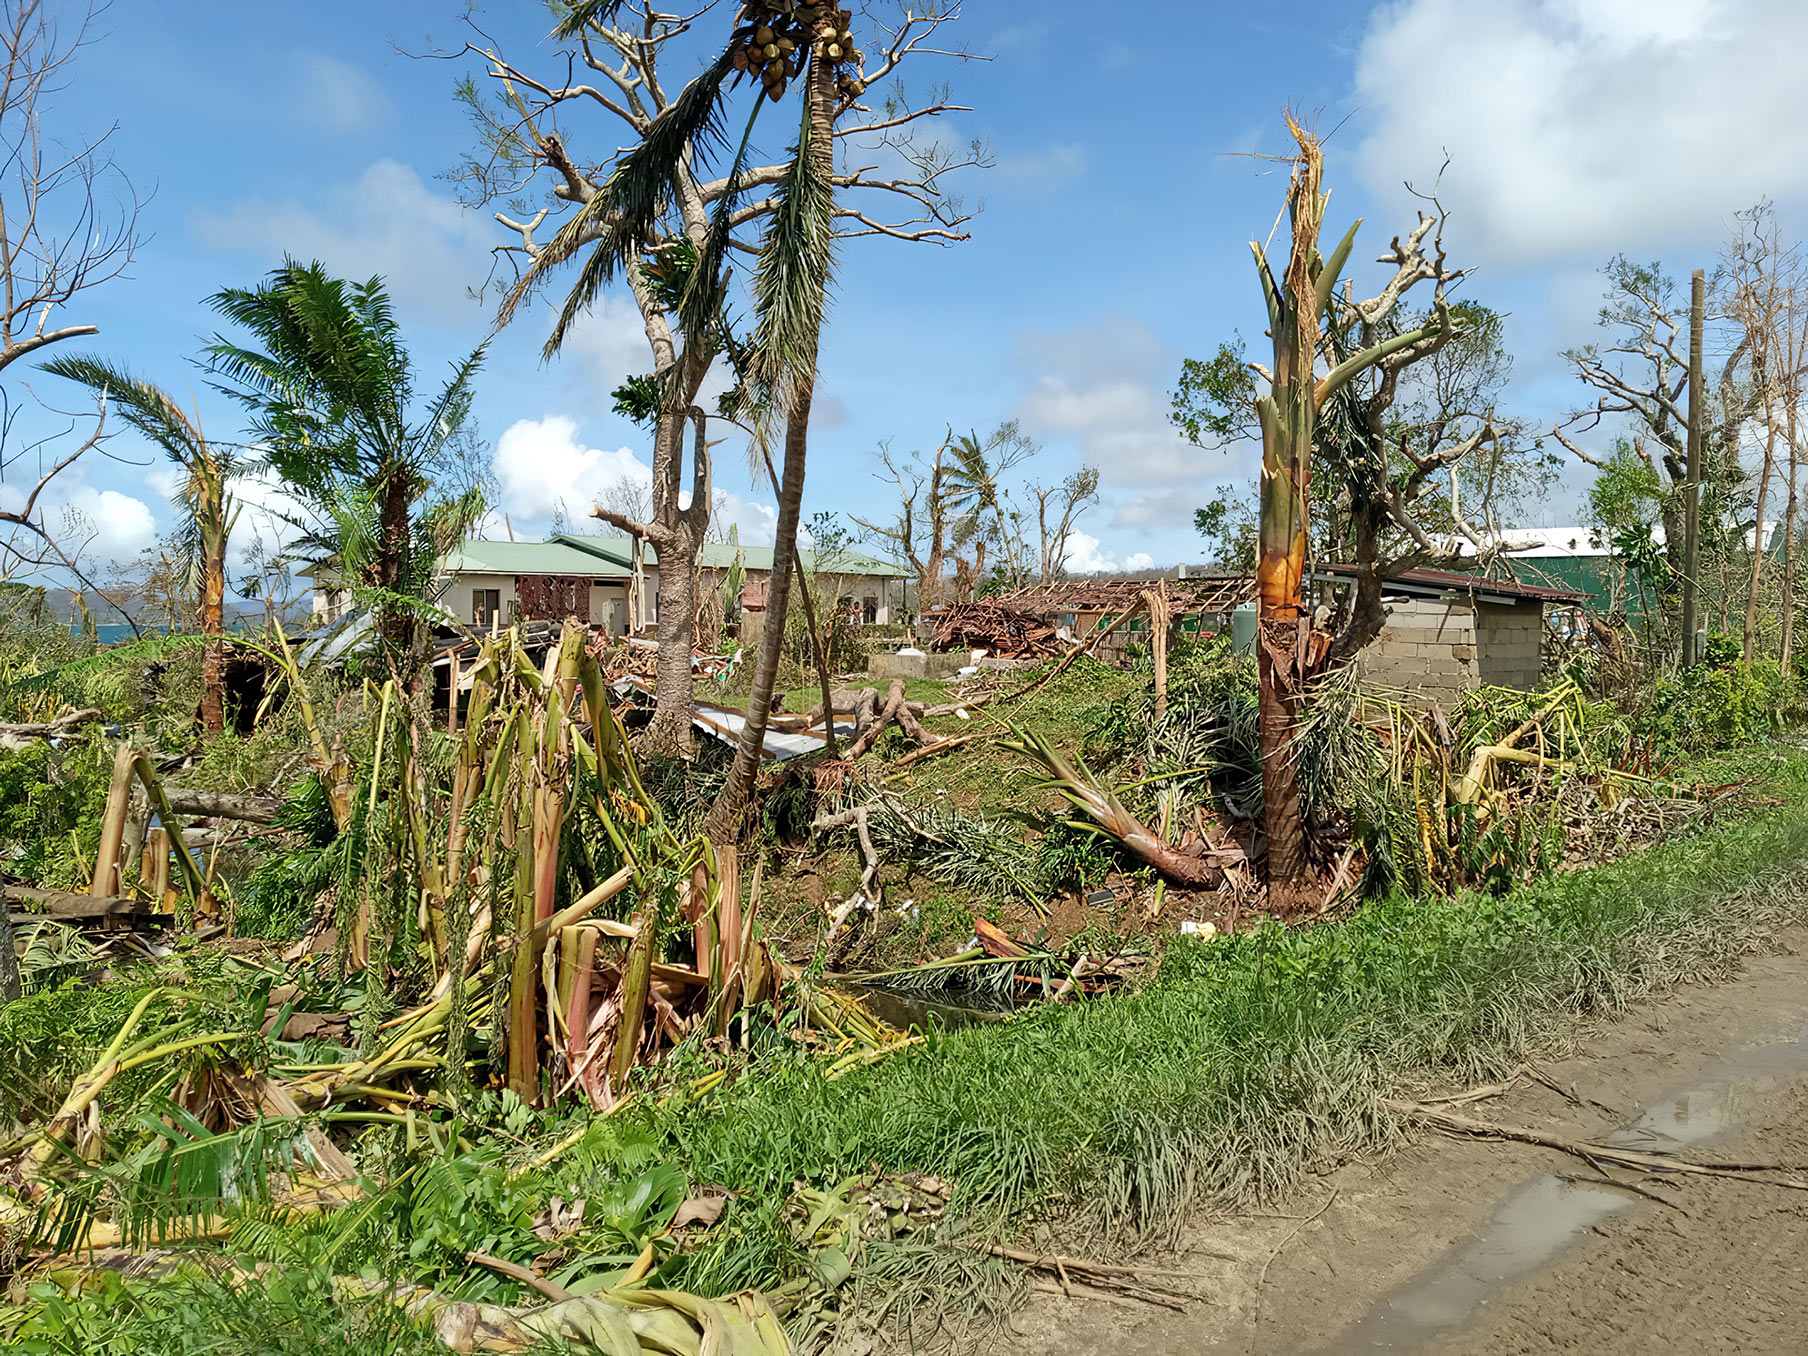 Cyclone Harold Wrecks Havoc On Vanuatu